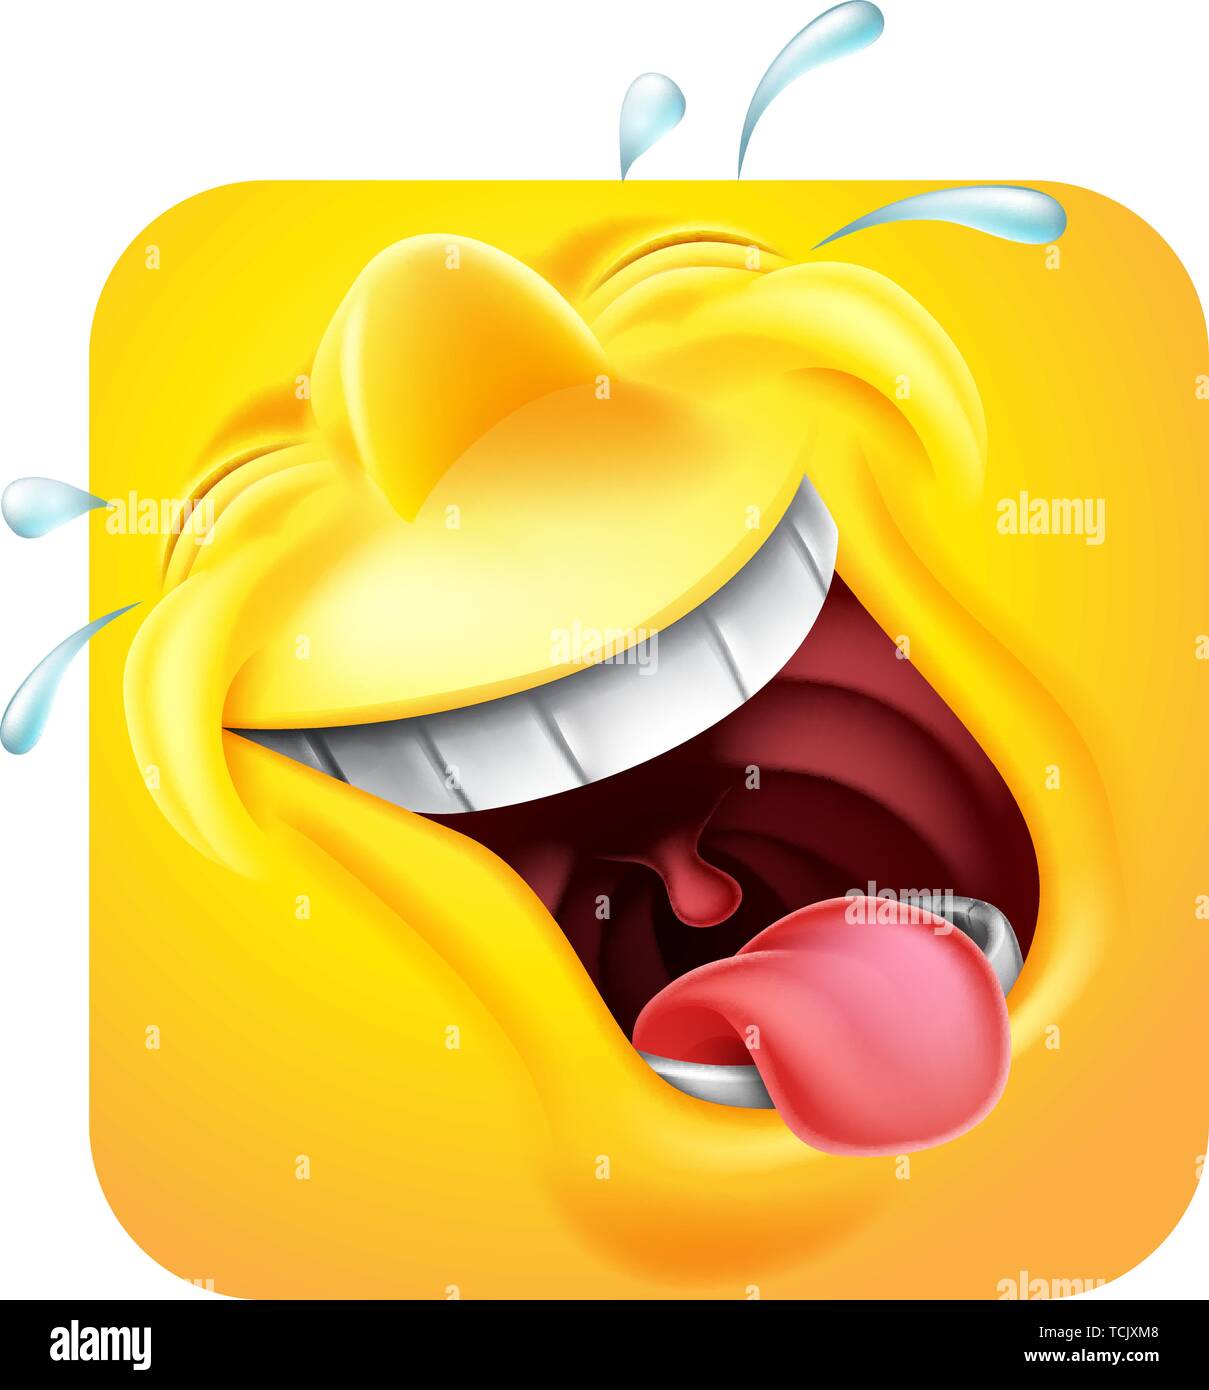 Lachend Emoji Emoticon-symbol 3D Cartoon Charakter Stock Vektor